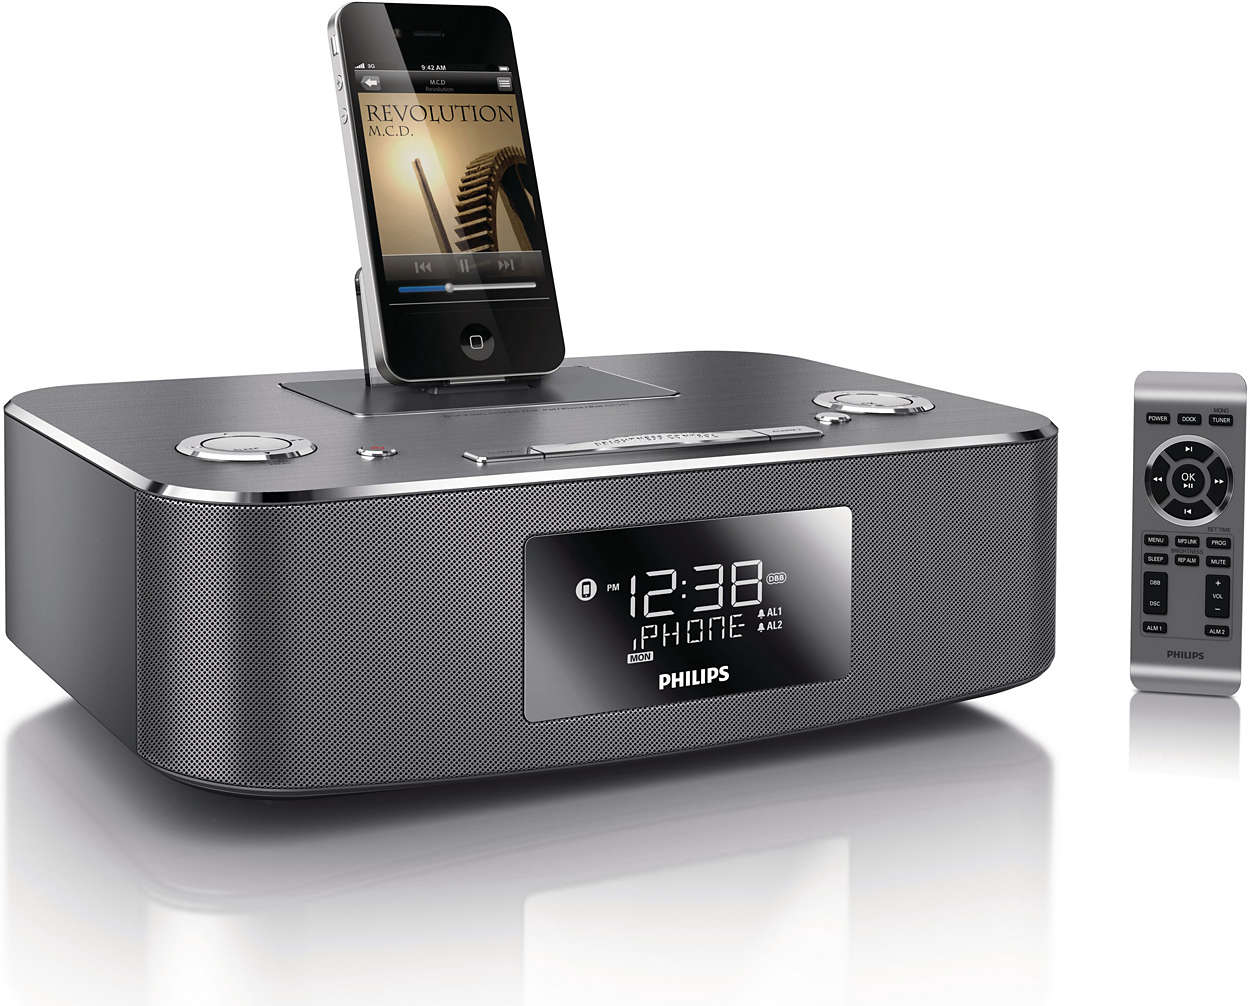 Philips DS1110 Fidelio Docking Speaker System iPod iPhone Dock W/ Alarm Clock 